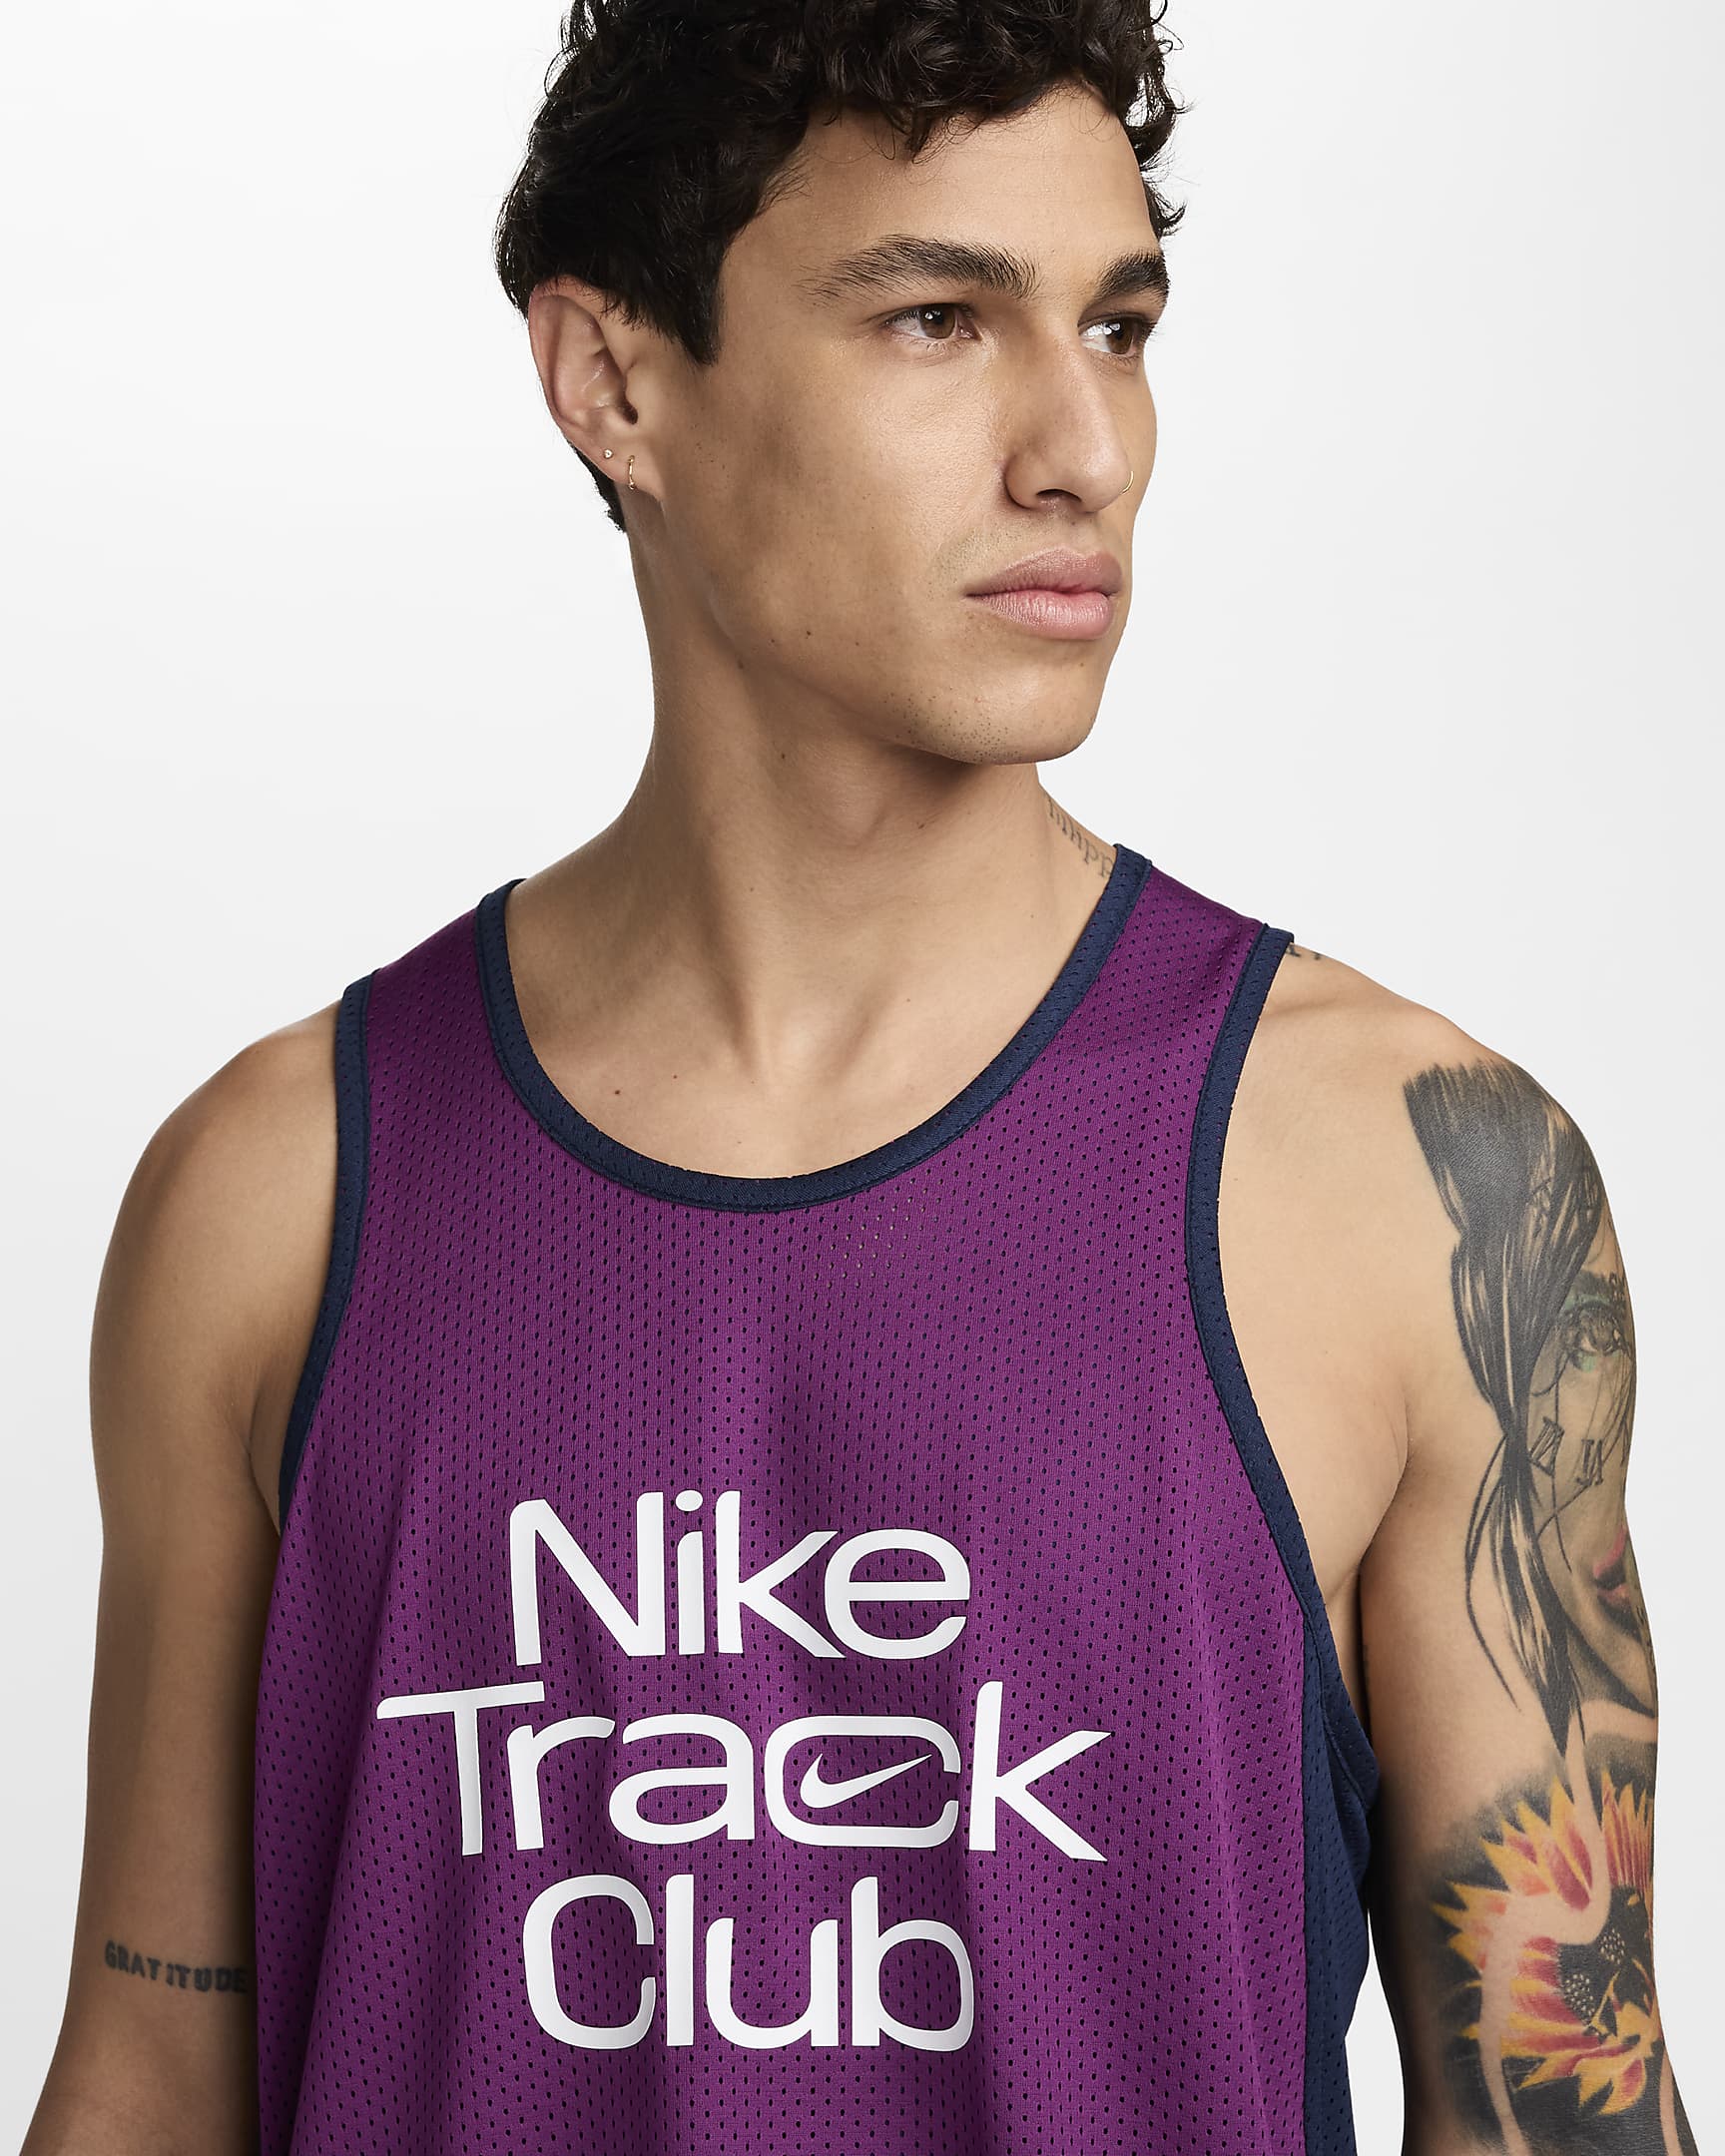 Nike Track Club Men's Dri-FIT Running Singlet - Viotech/Midnight Navy/Summit White